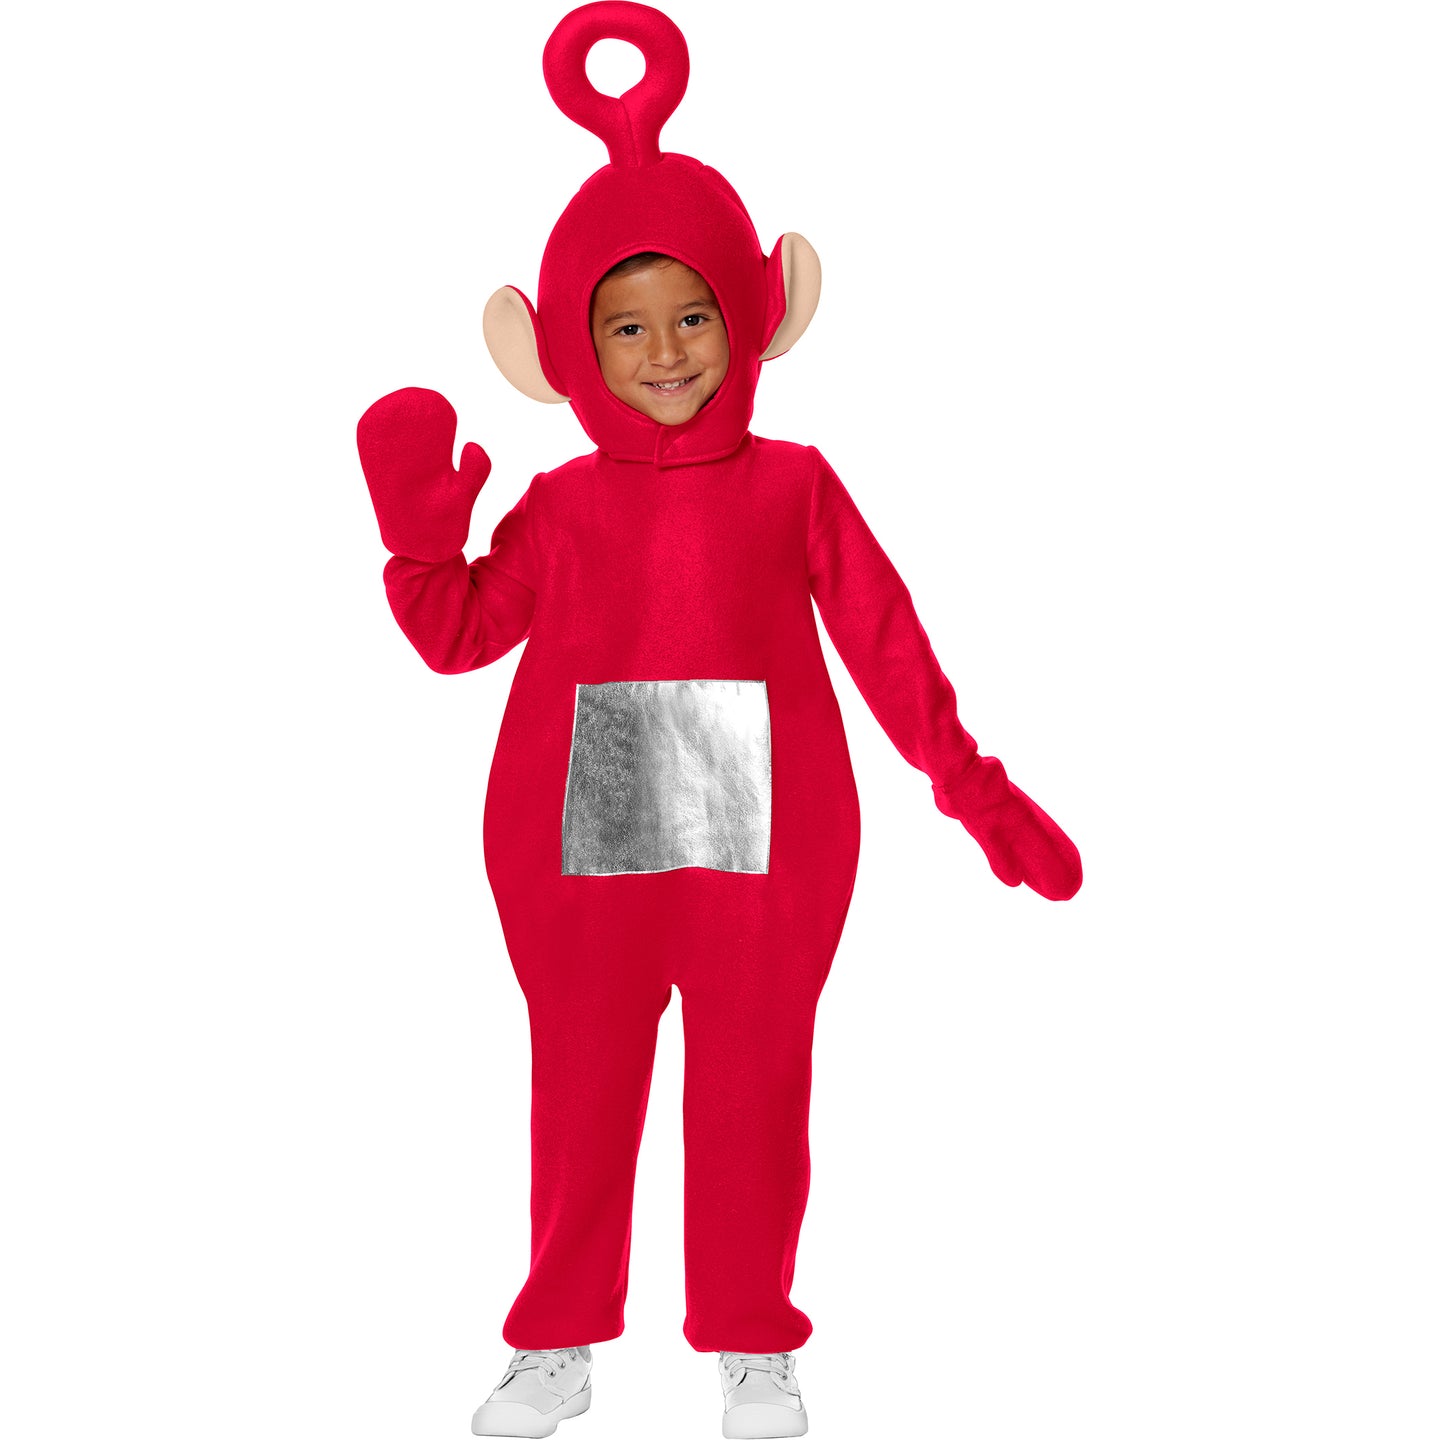 InSpirit Designs Toddler Teletubbies Po Costume